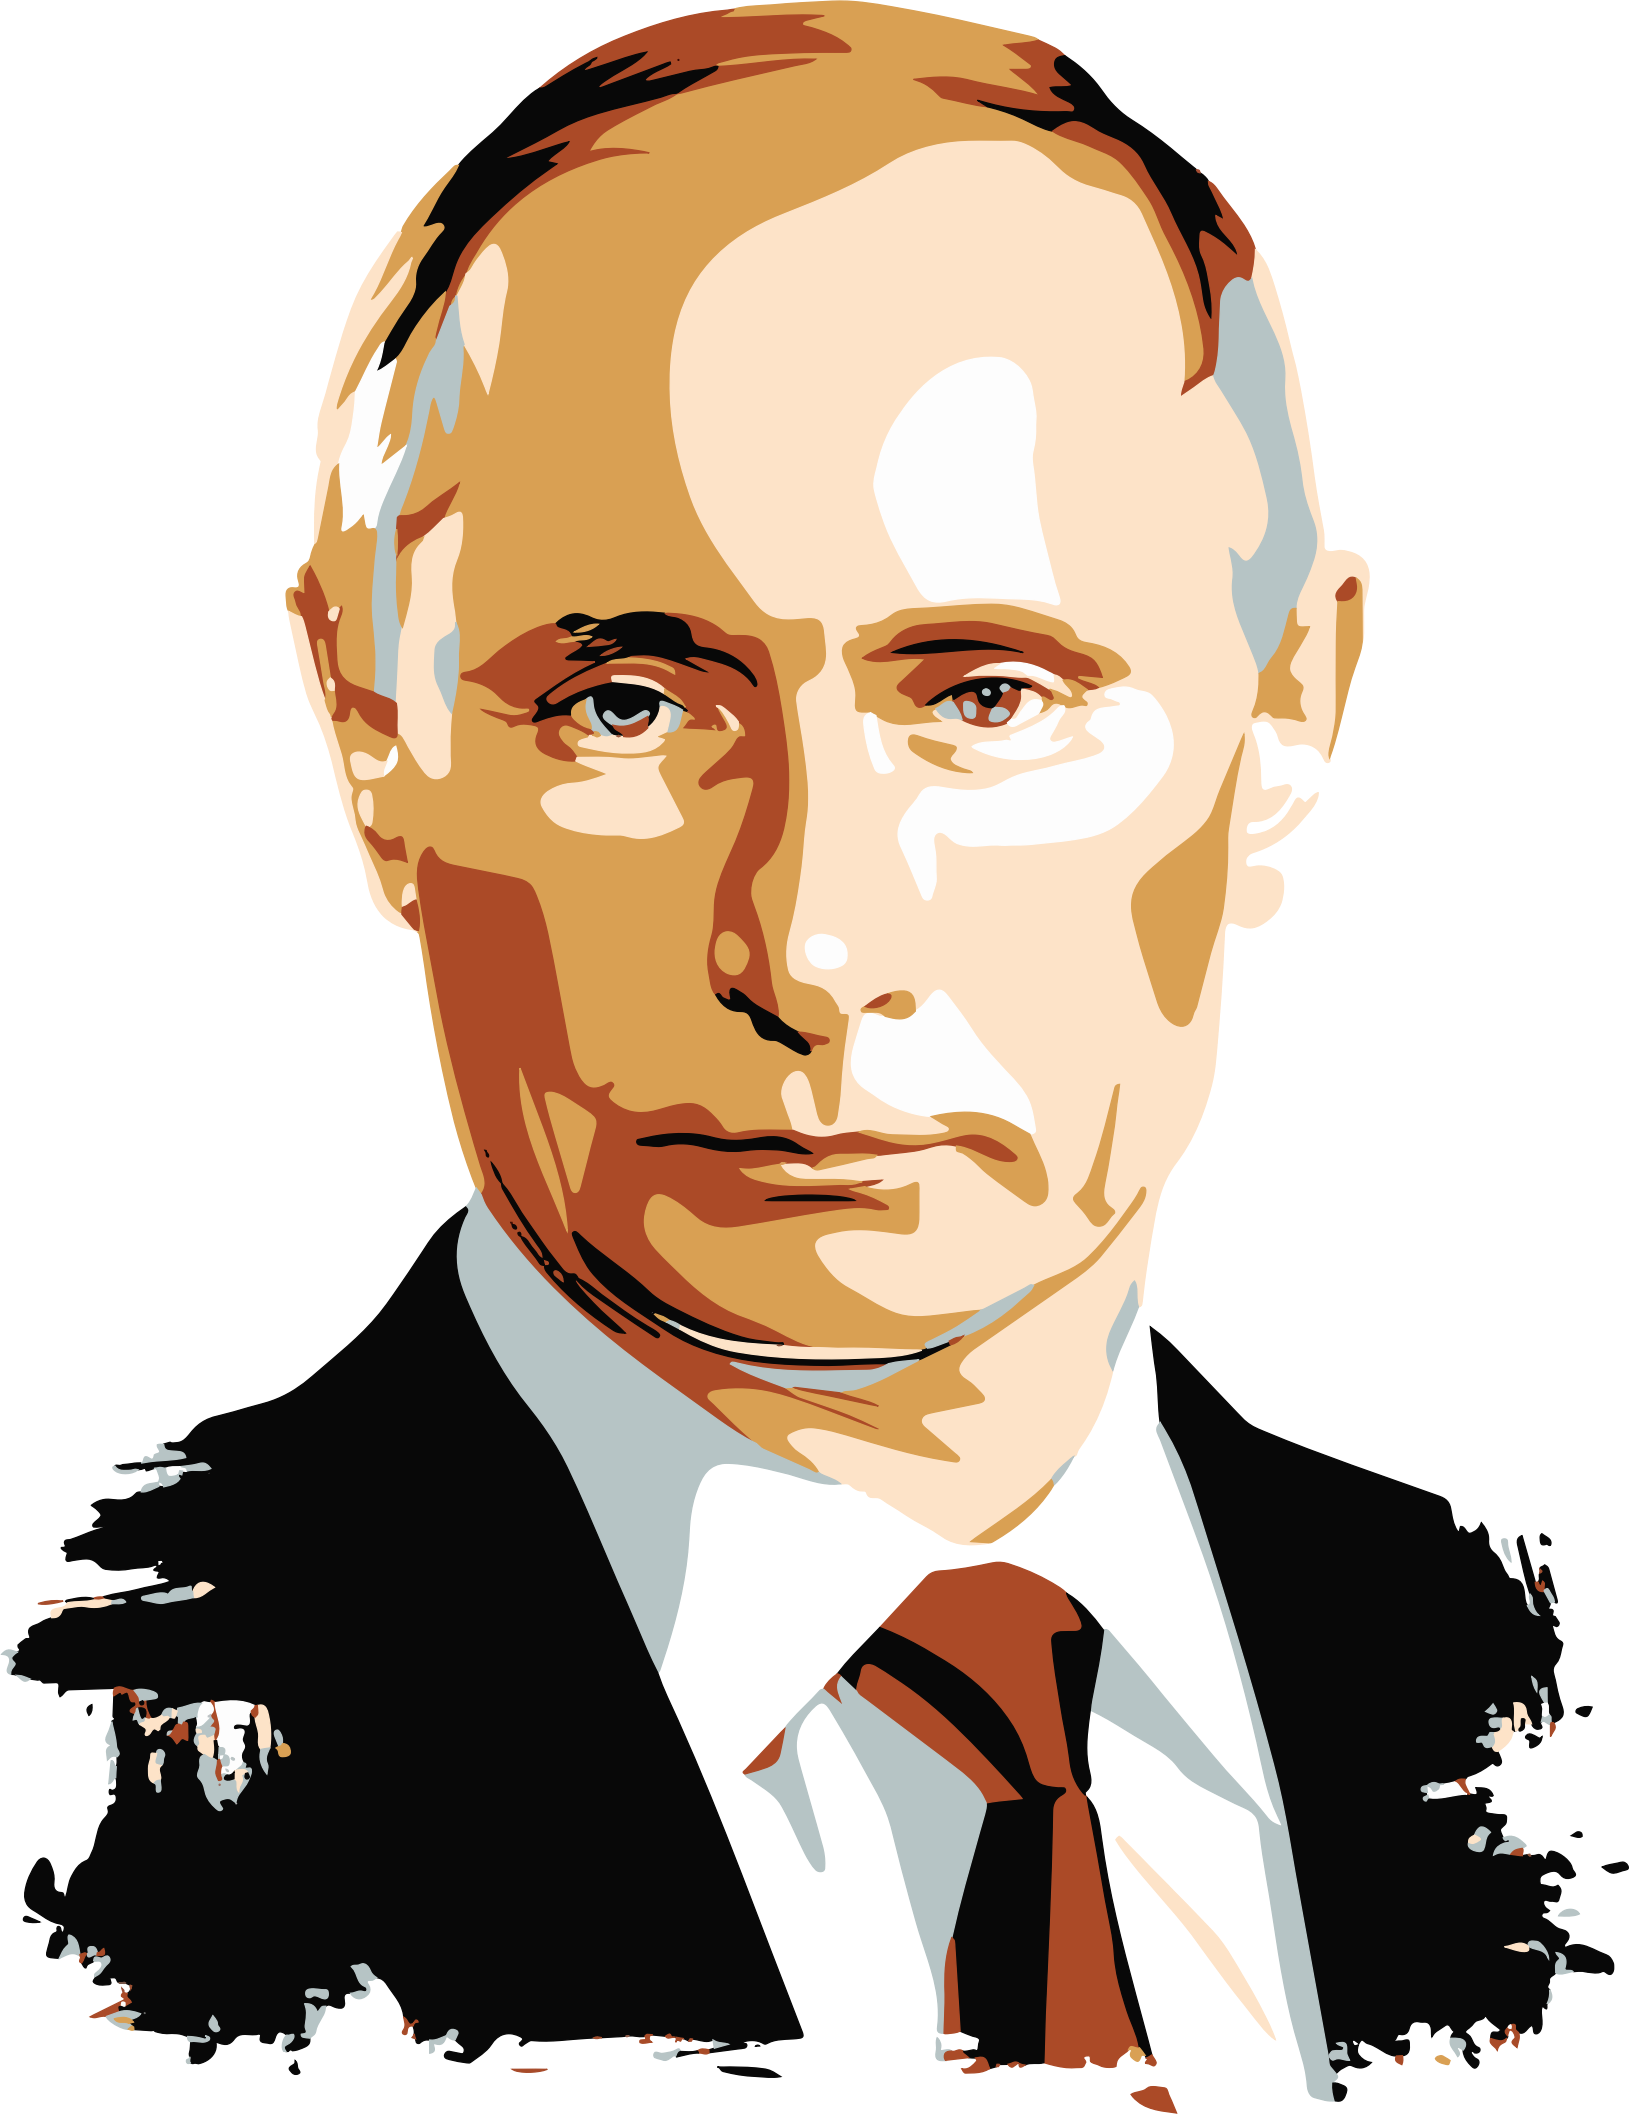 Stylized Portraitof Vladimir